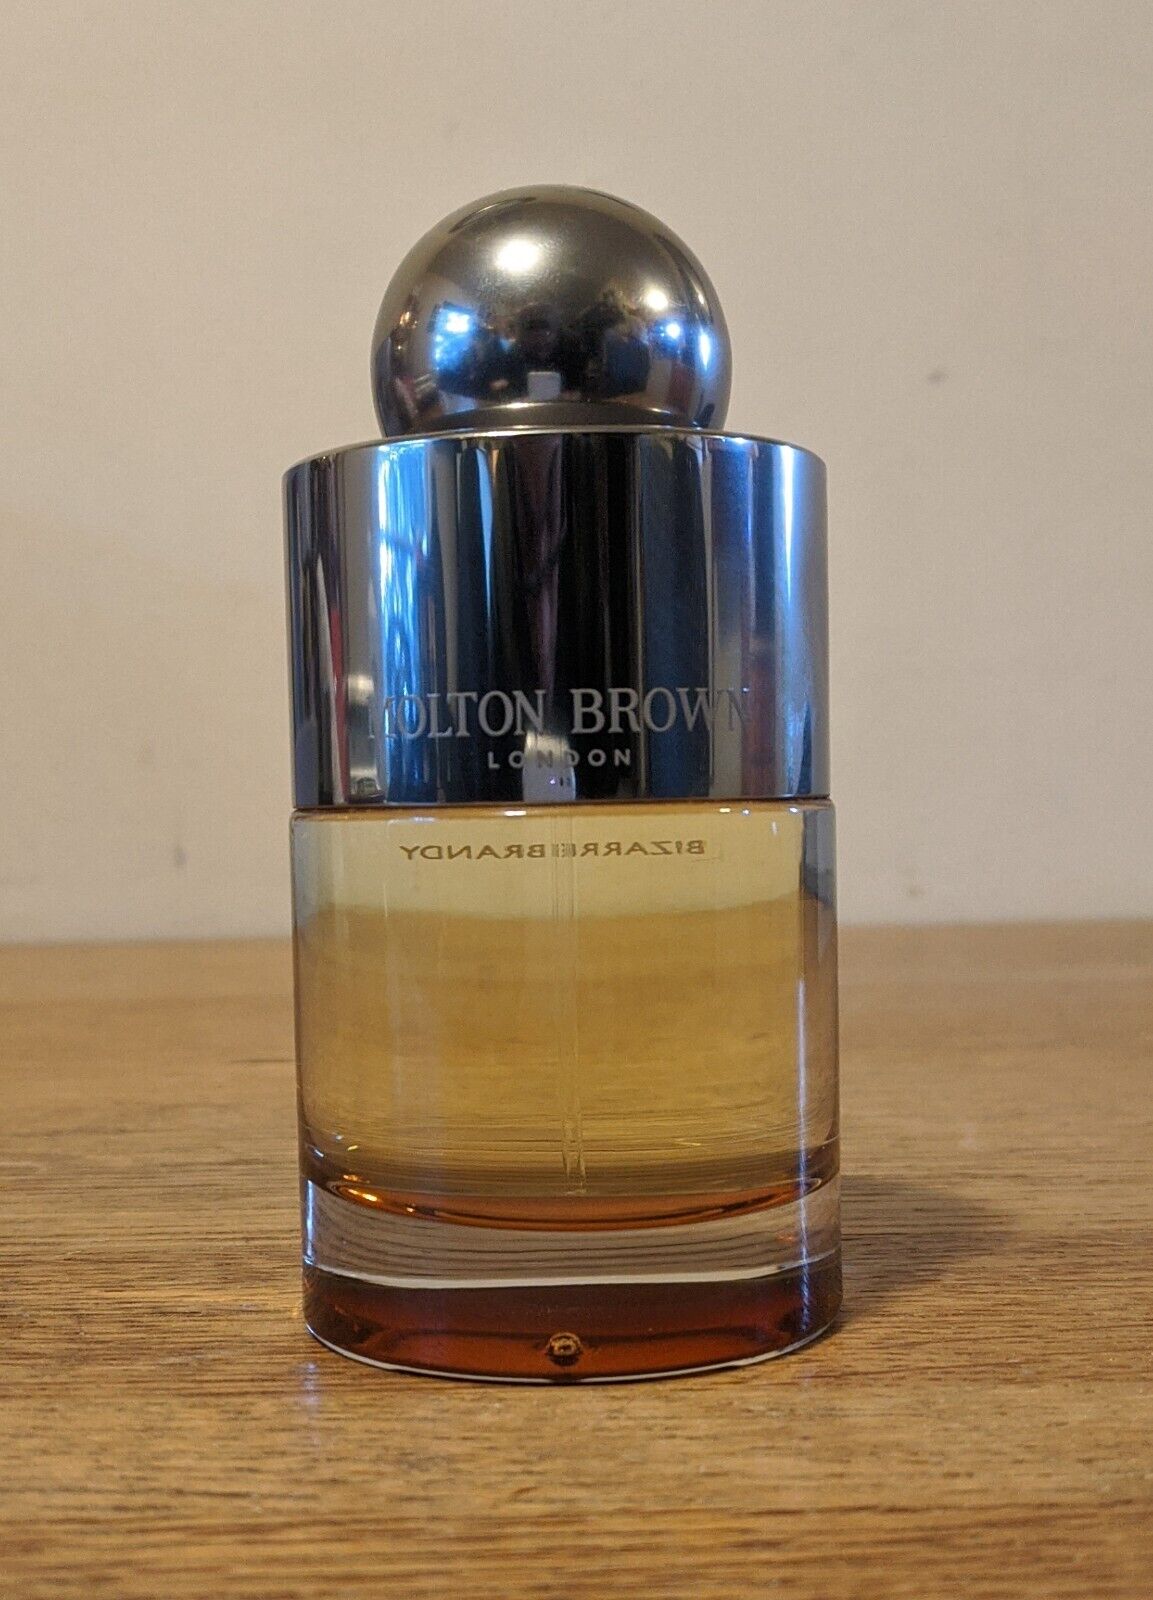 Molton Brown Bizarre Brandy EDT 100 ml 3.3 oz - Discontinued - Partially used